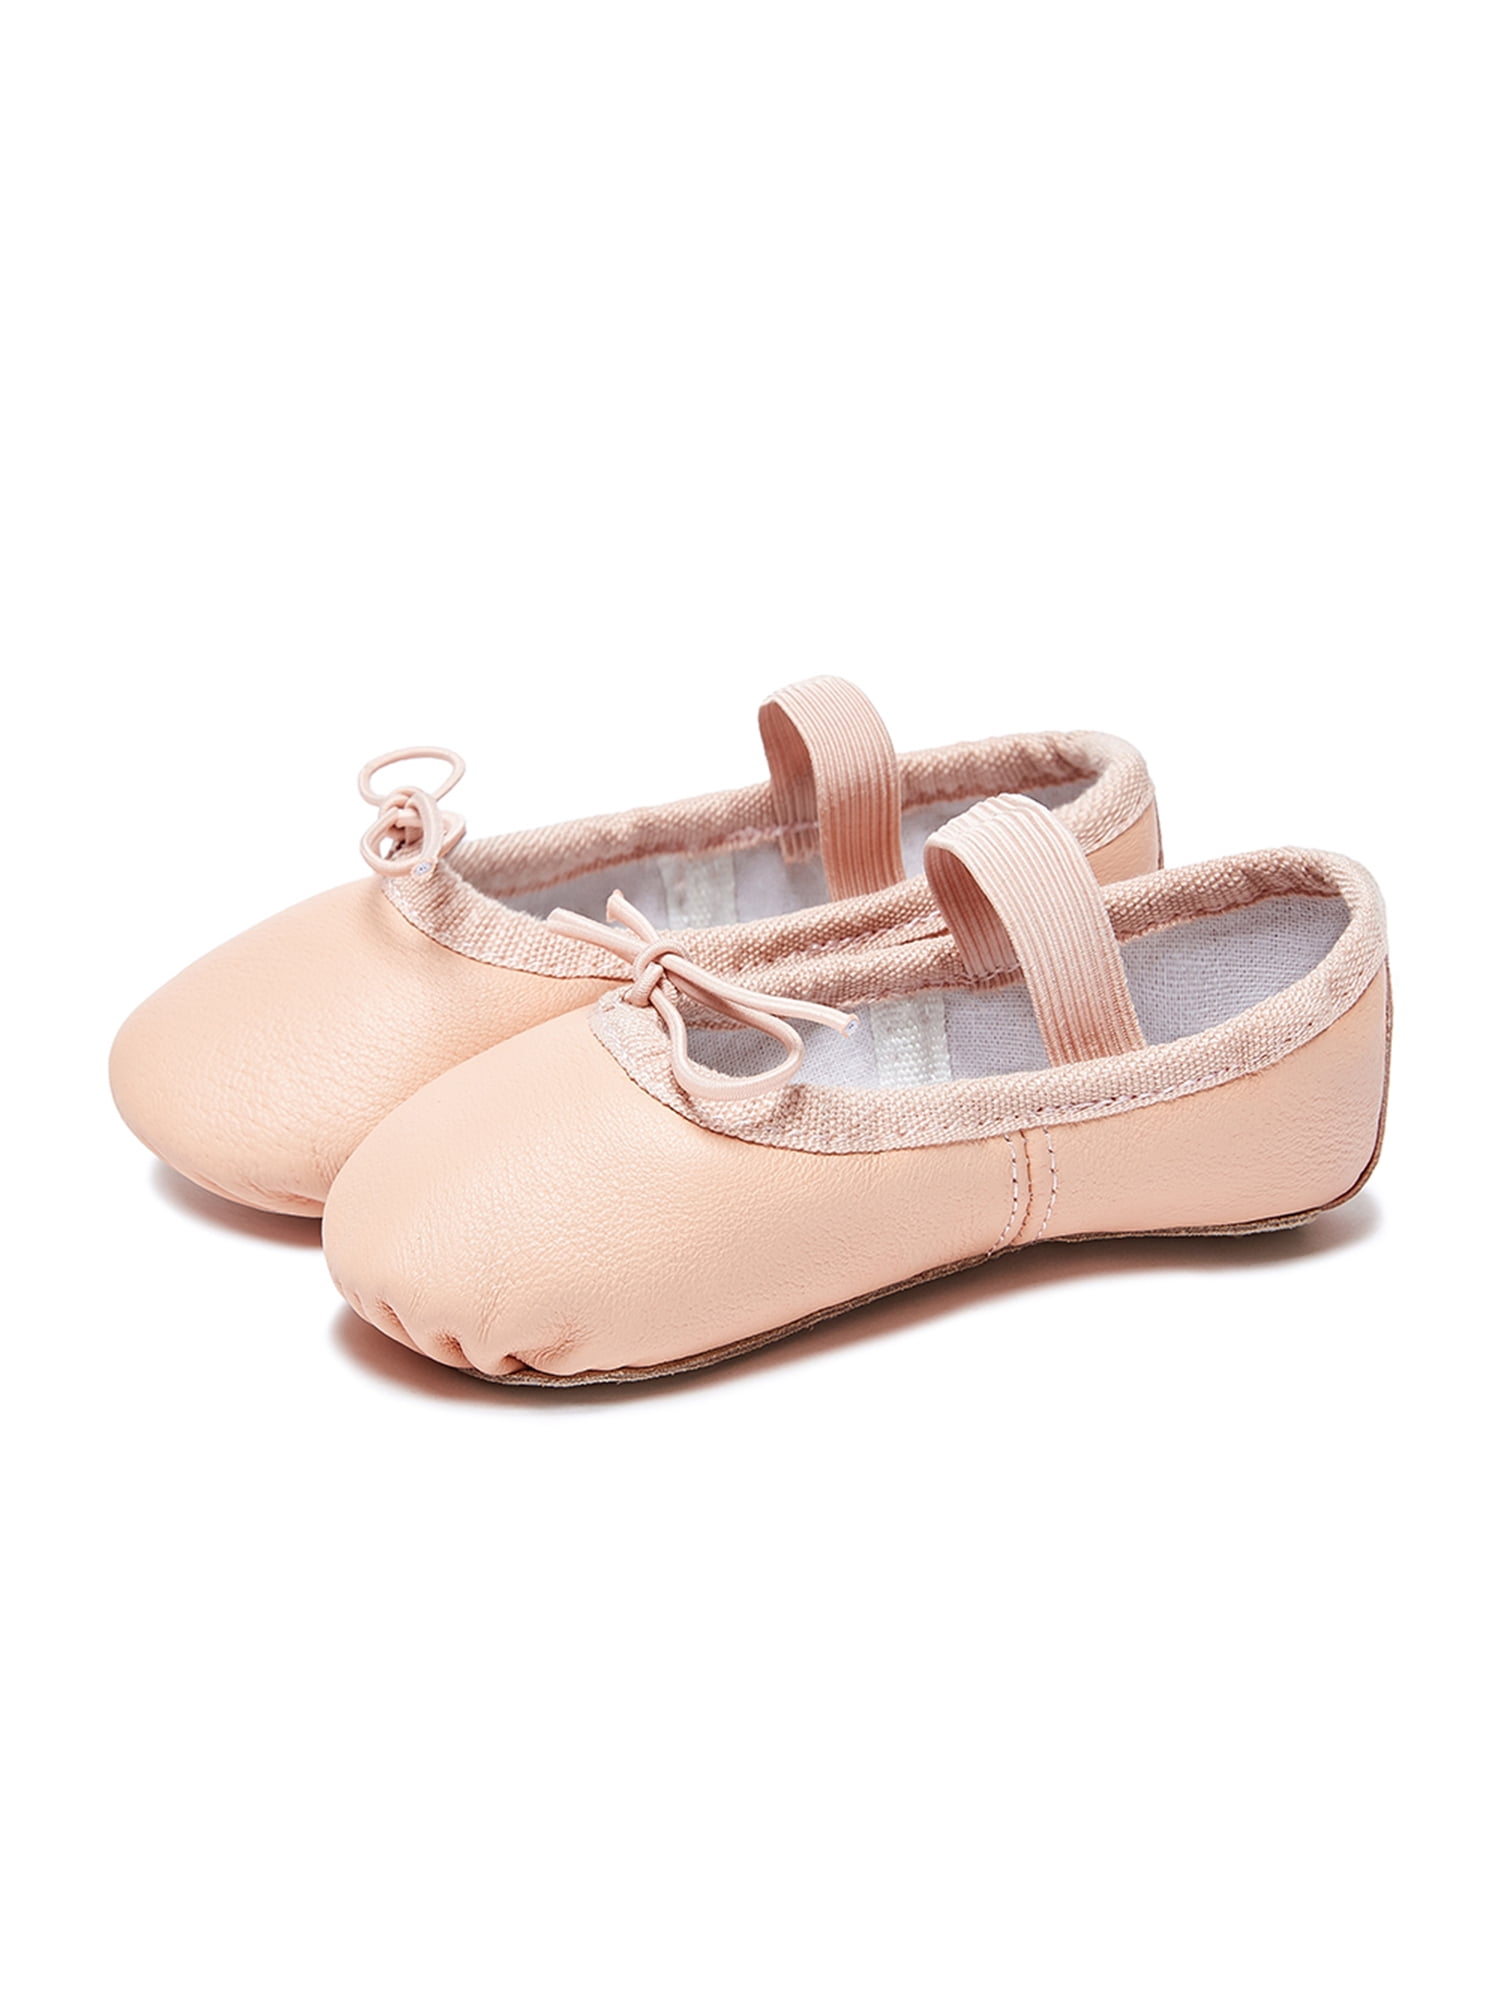 Toddler Premium Leather Ballet Shoes Full Sole Dance Slippers for Kids Little Girls 3-12T